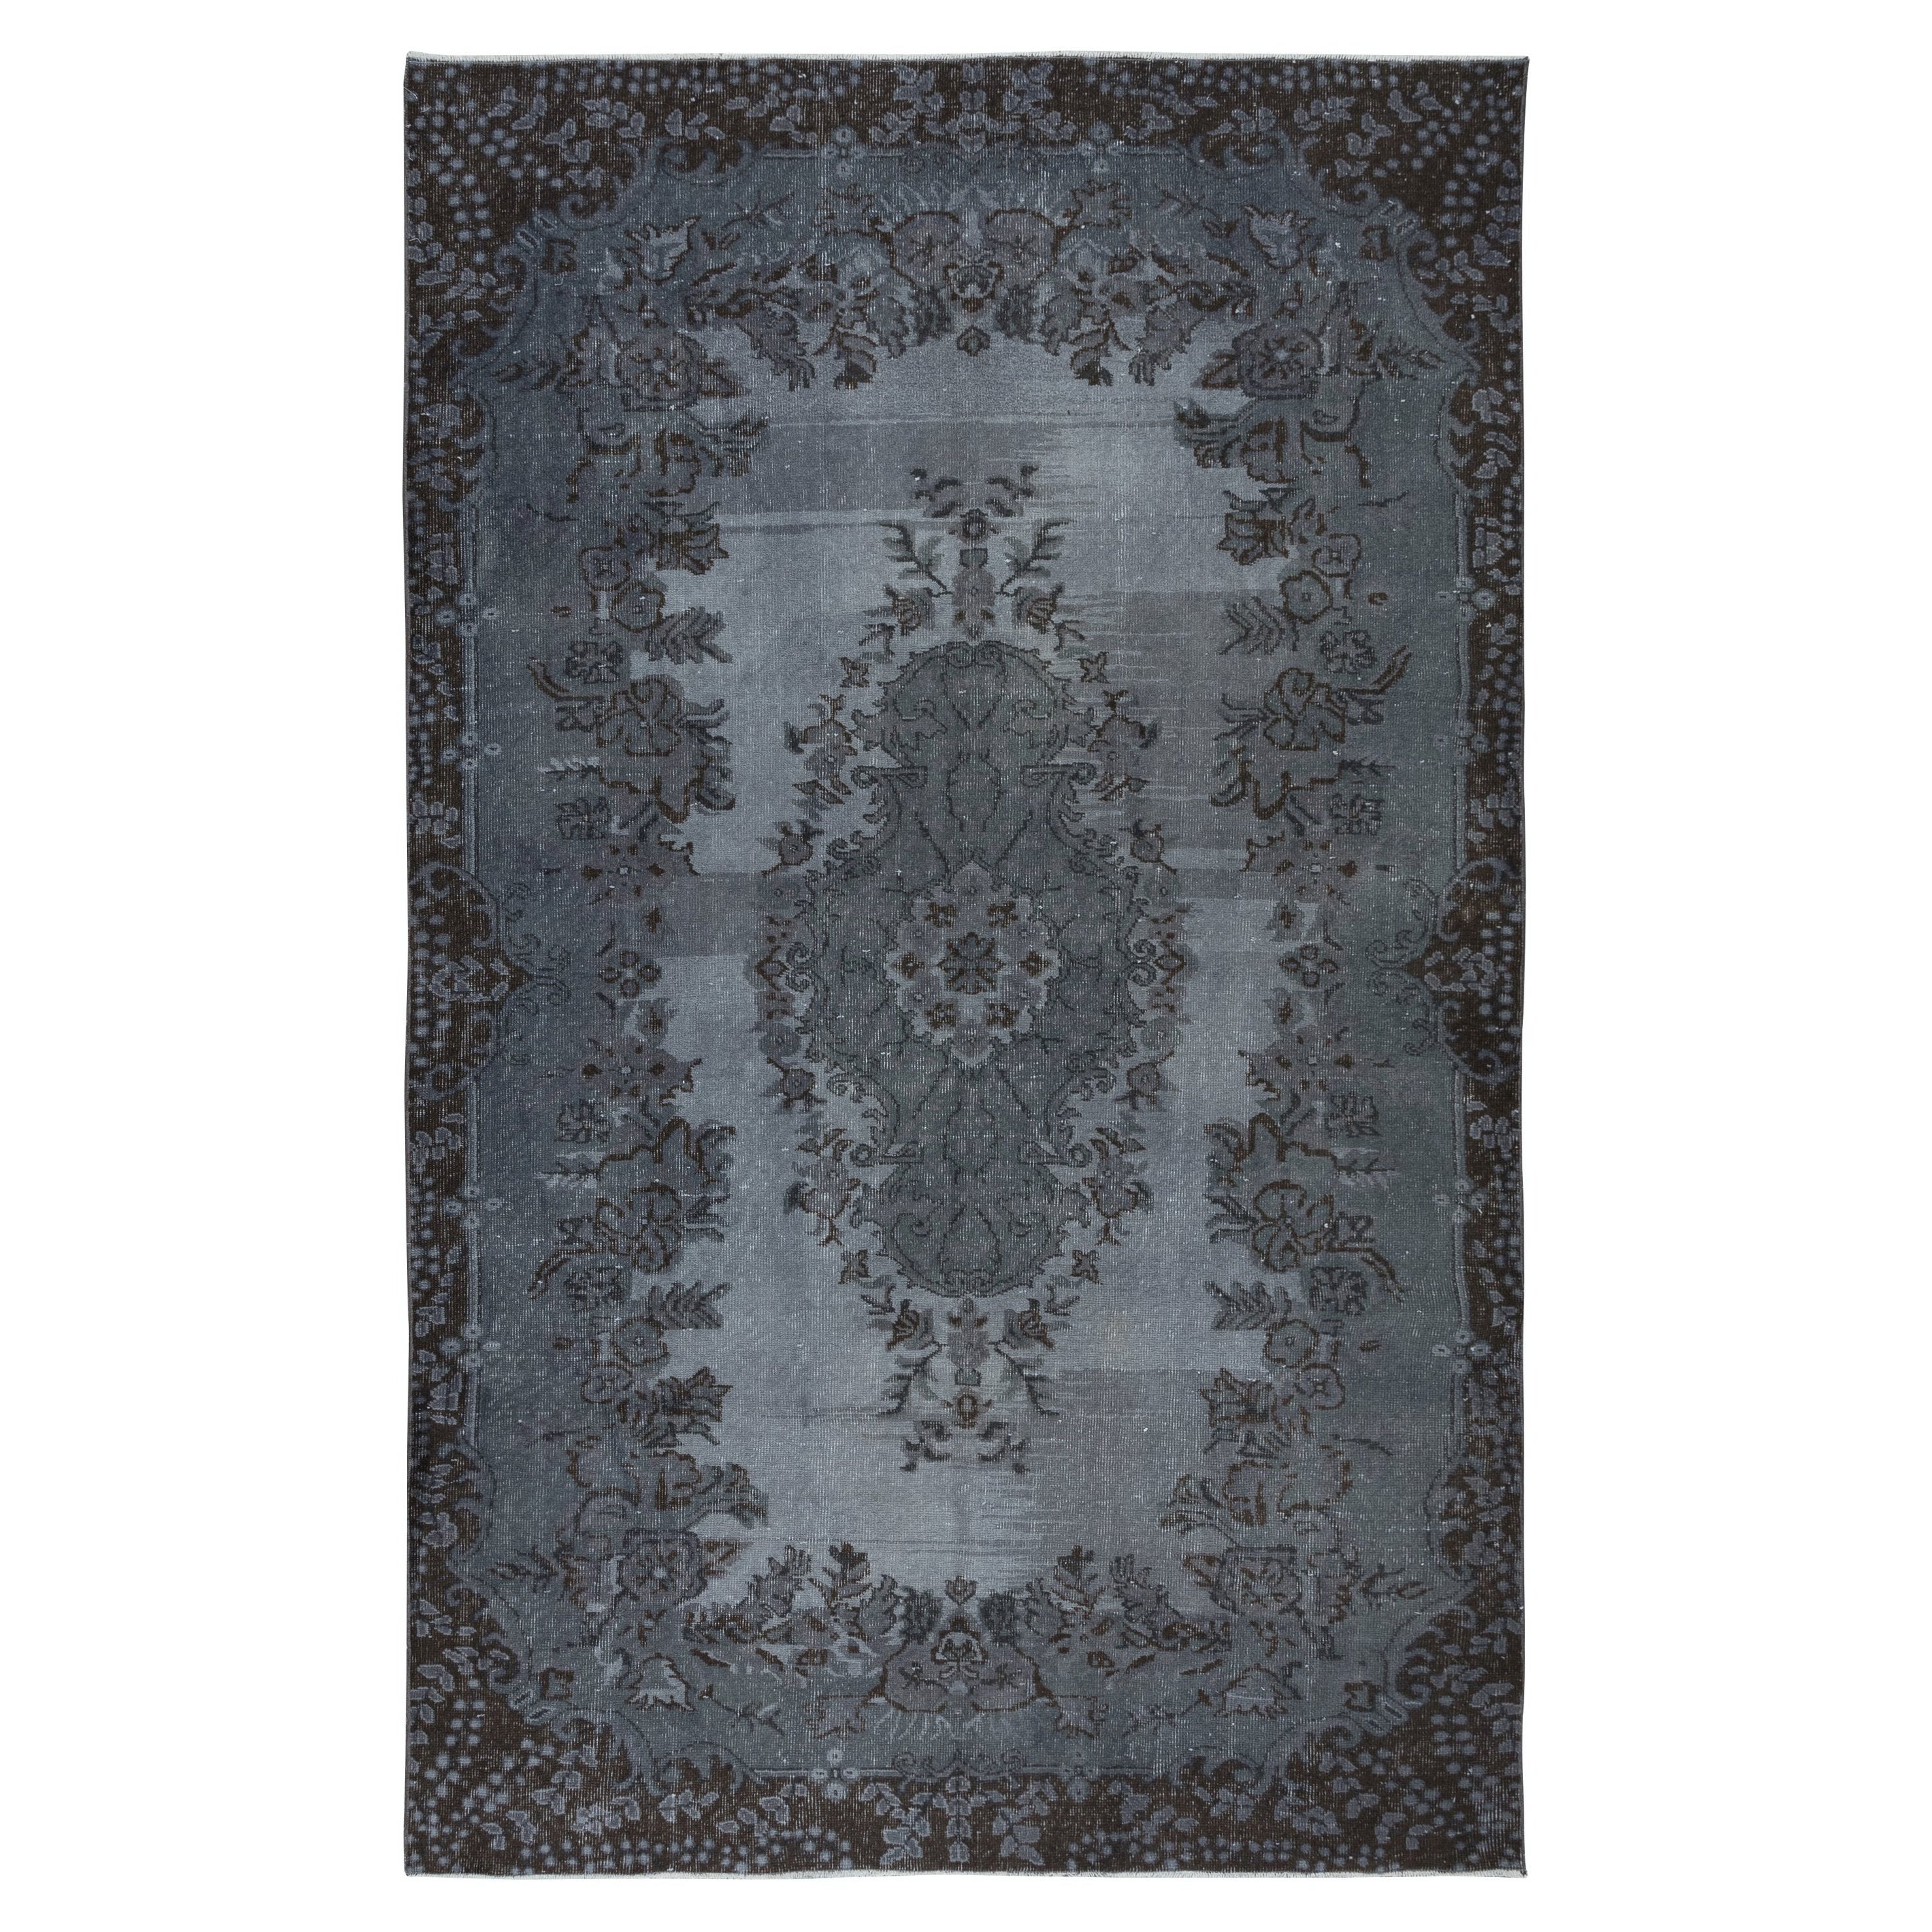 6.3x10 Ft Handmade Gray Area Rug with Medallion Design. Modern Turkish Carpet